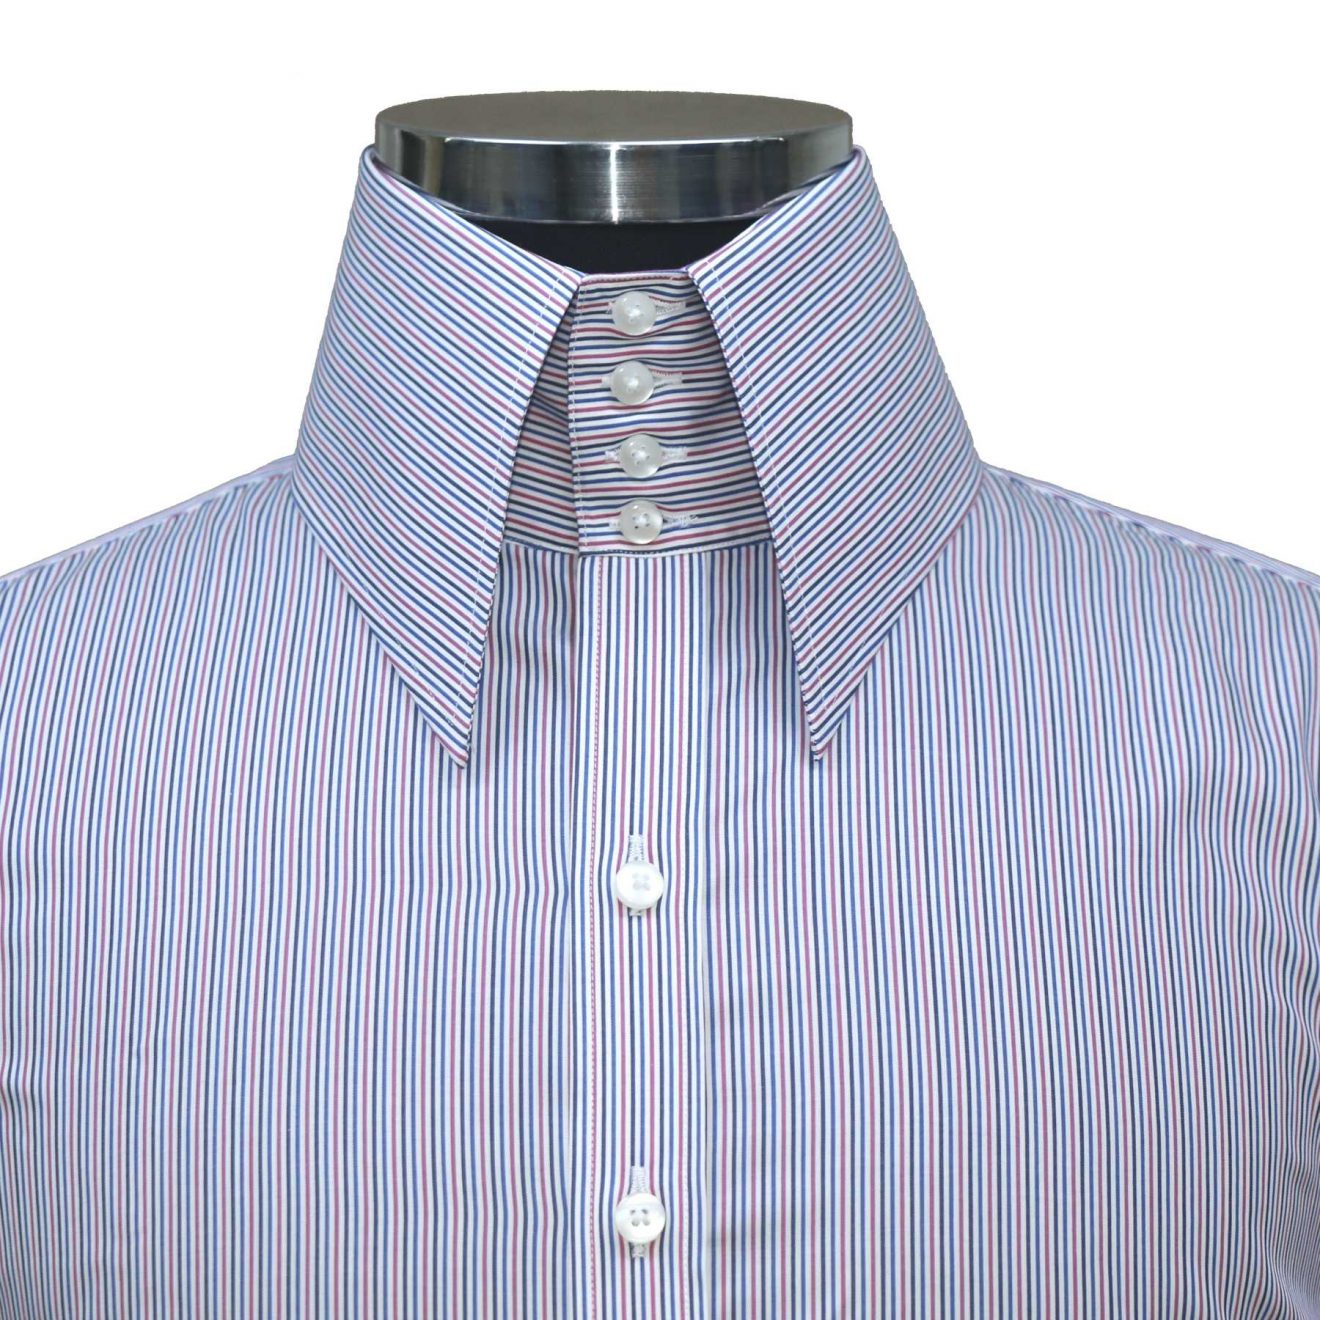 High Collar Shirts - Online Shopping - Page 3 of 3 - John Clothier London